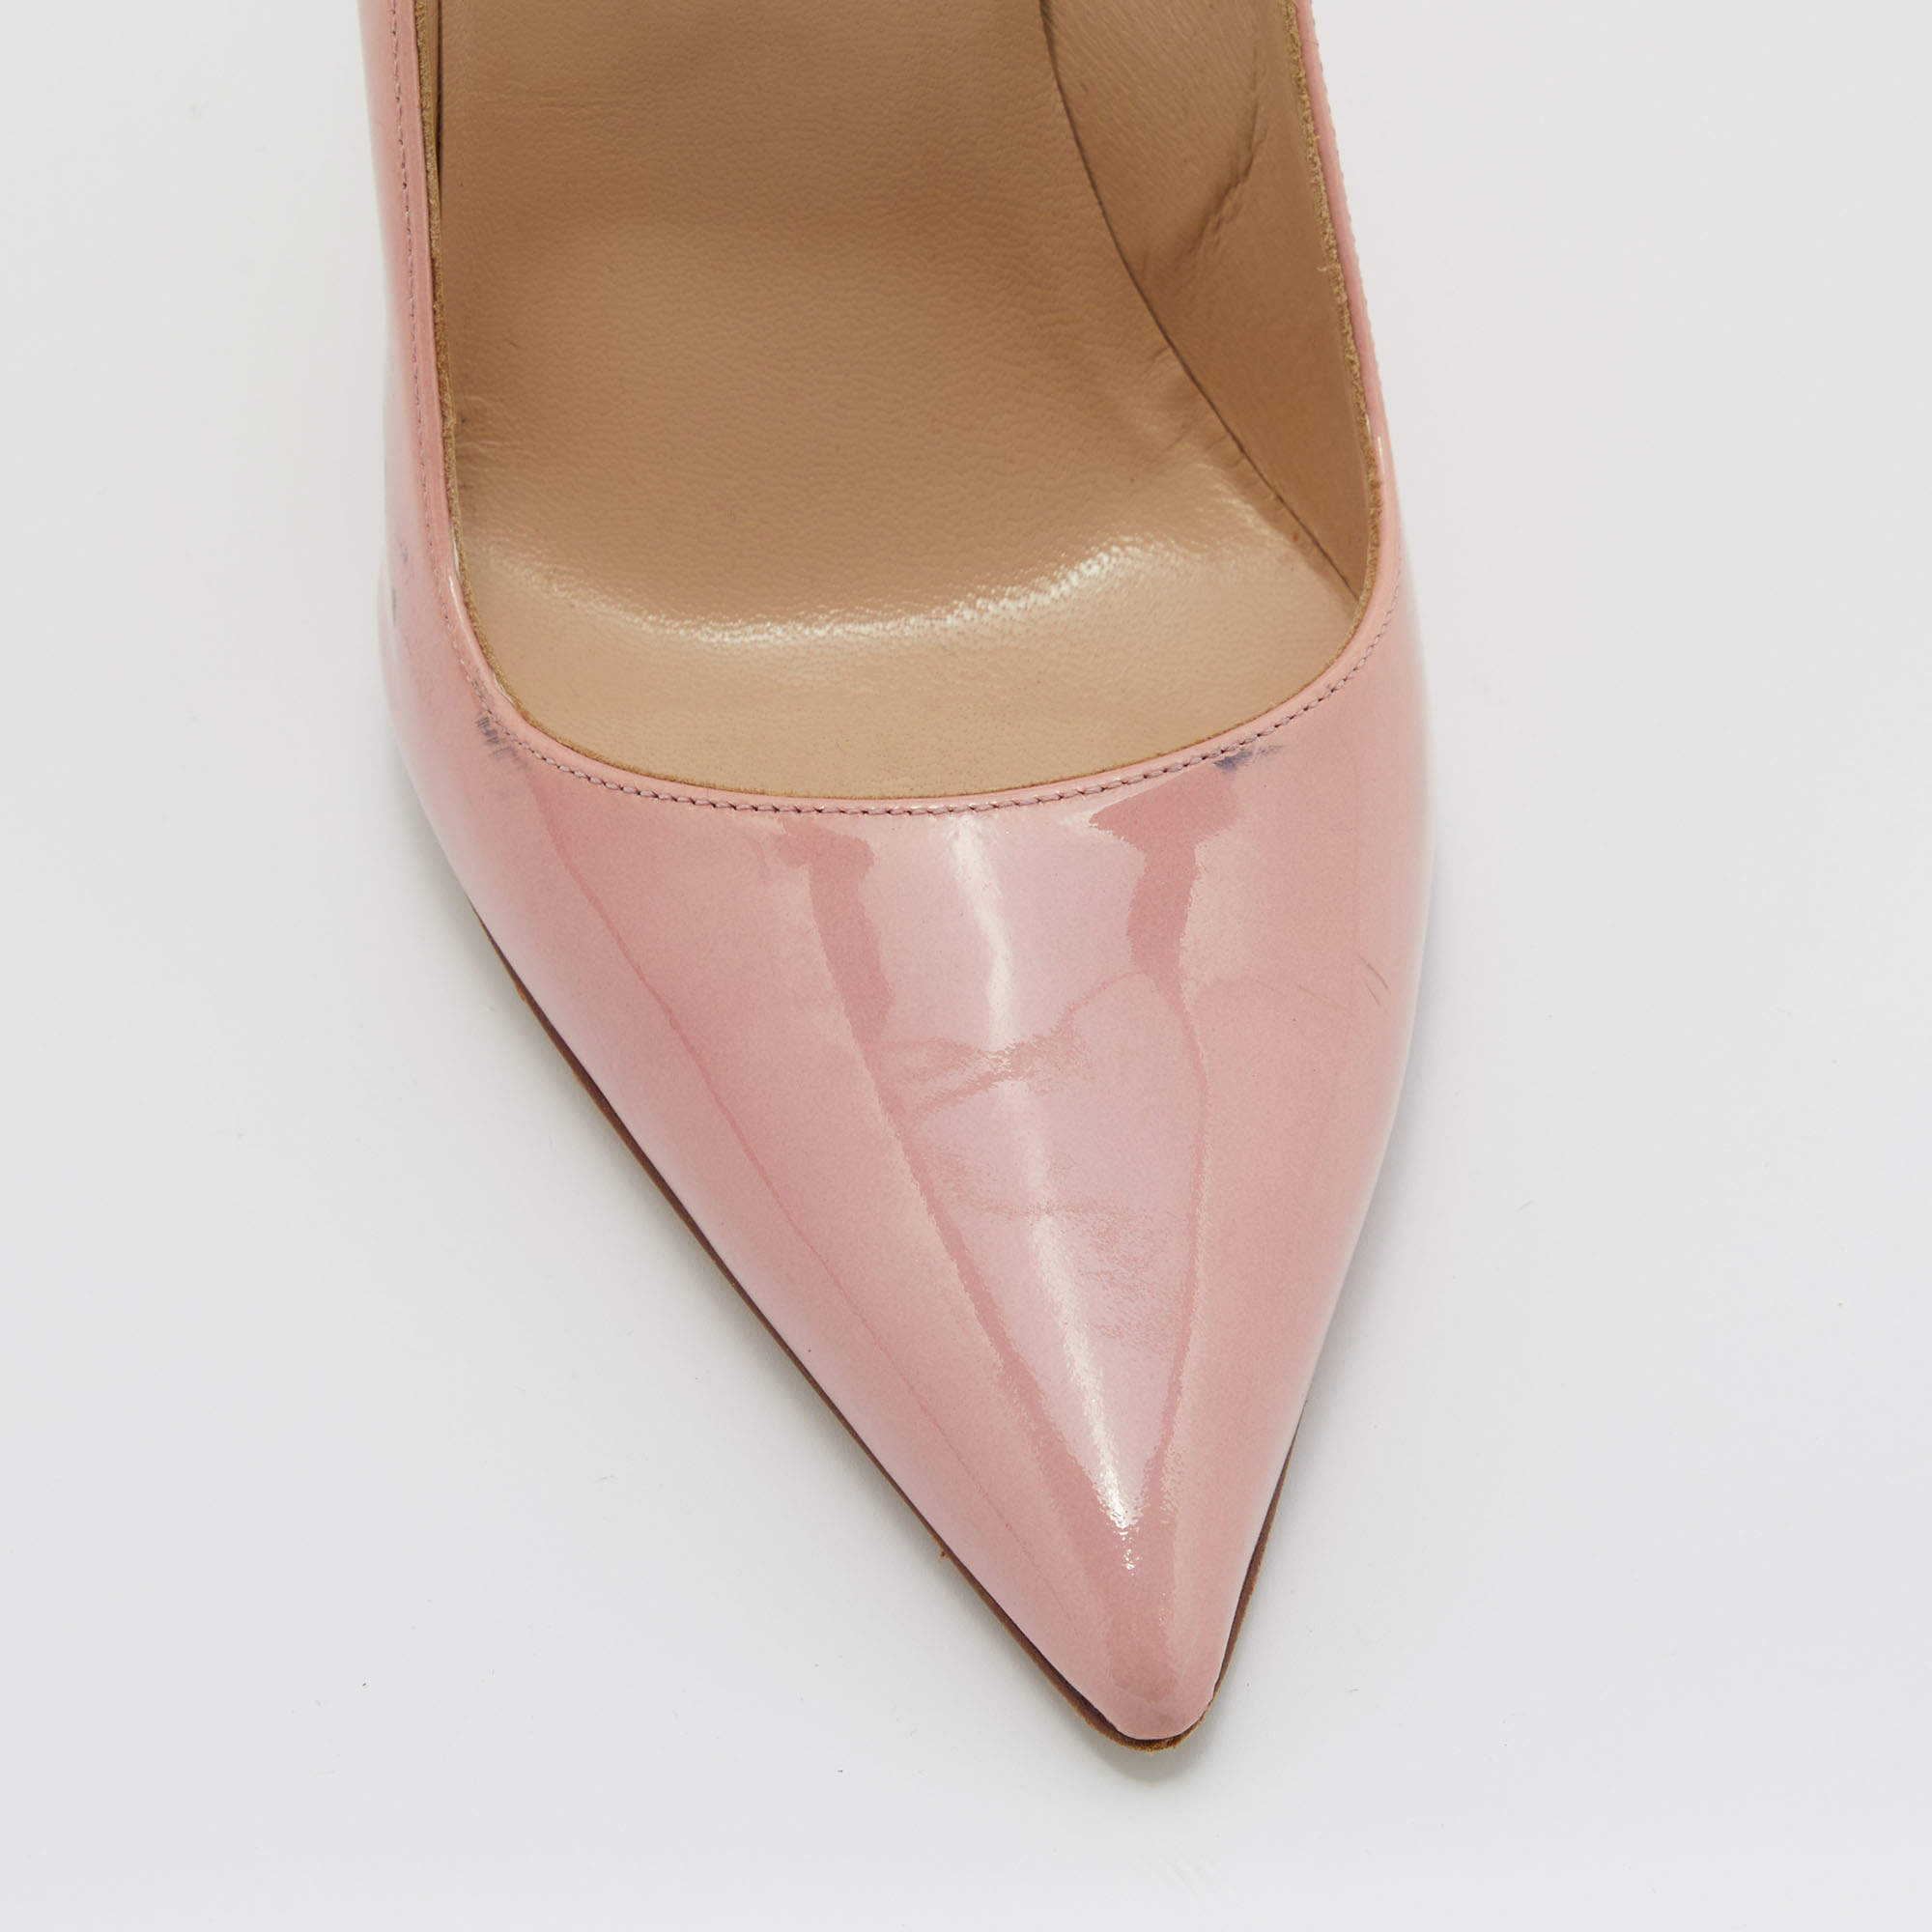 Manolo Blahnik Pink Patent Leather BB Pointed Toe Pumps Size 37.5 Manolo  Blahnik